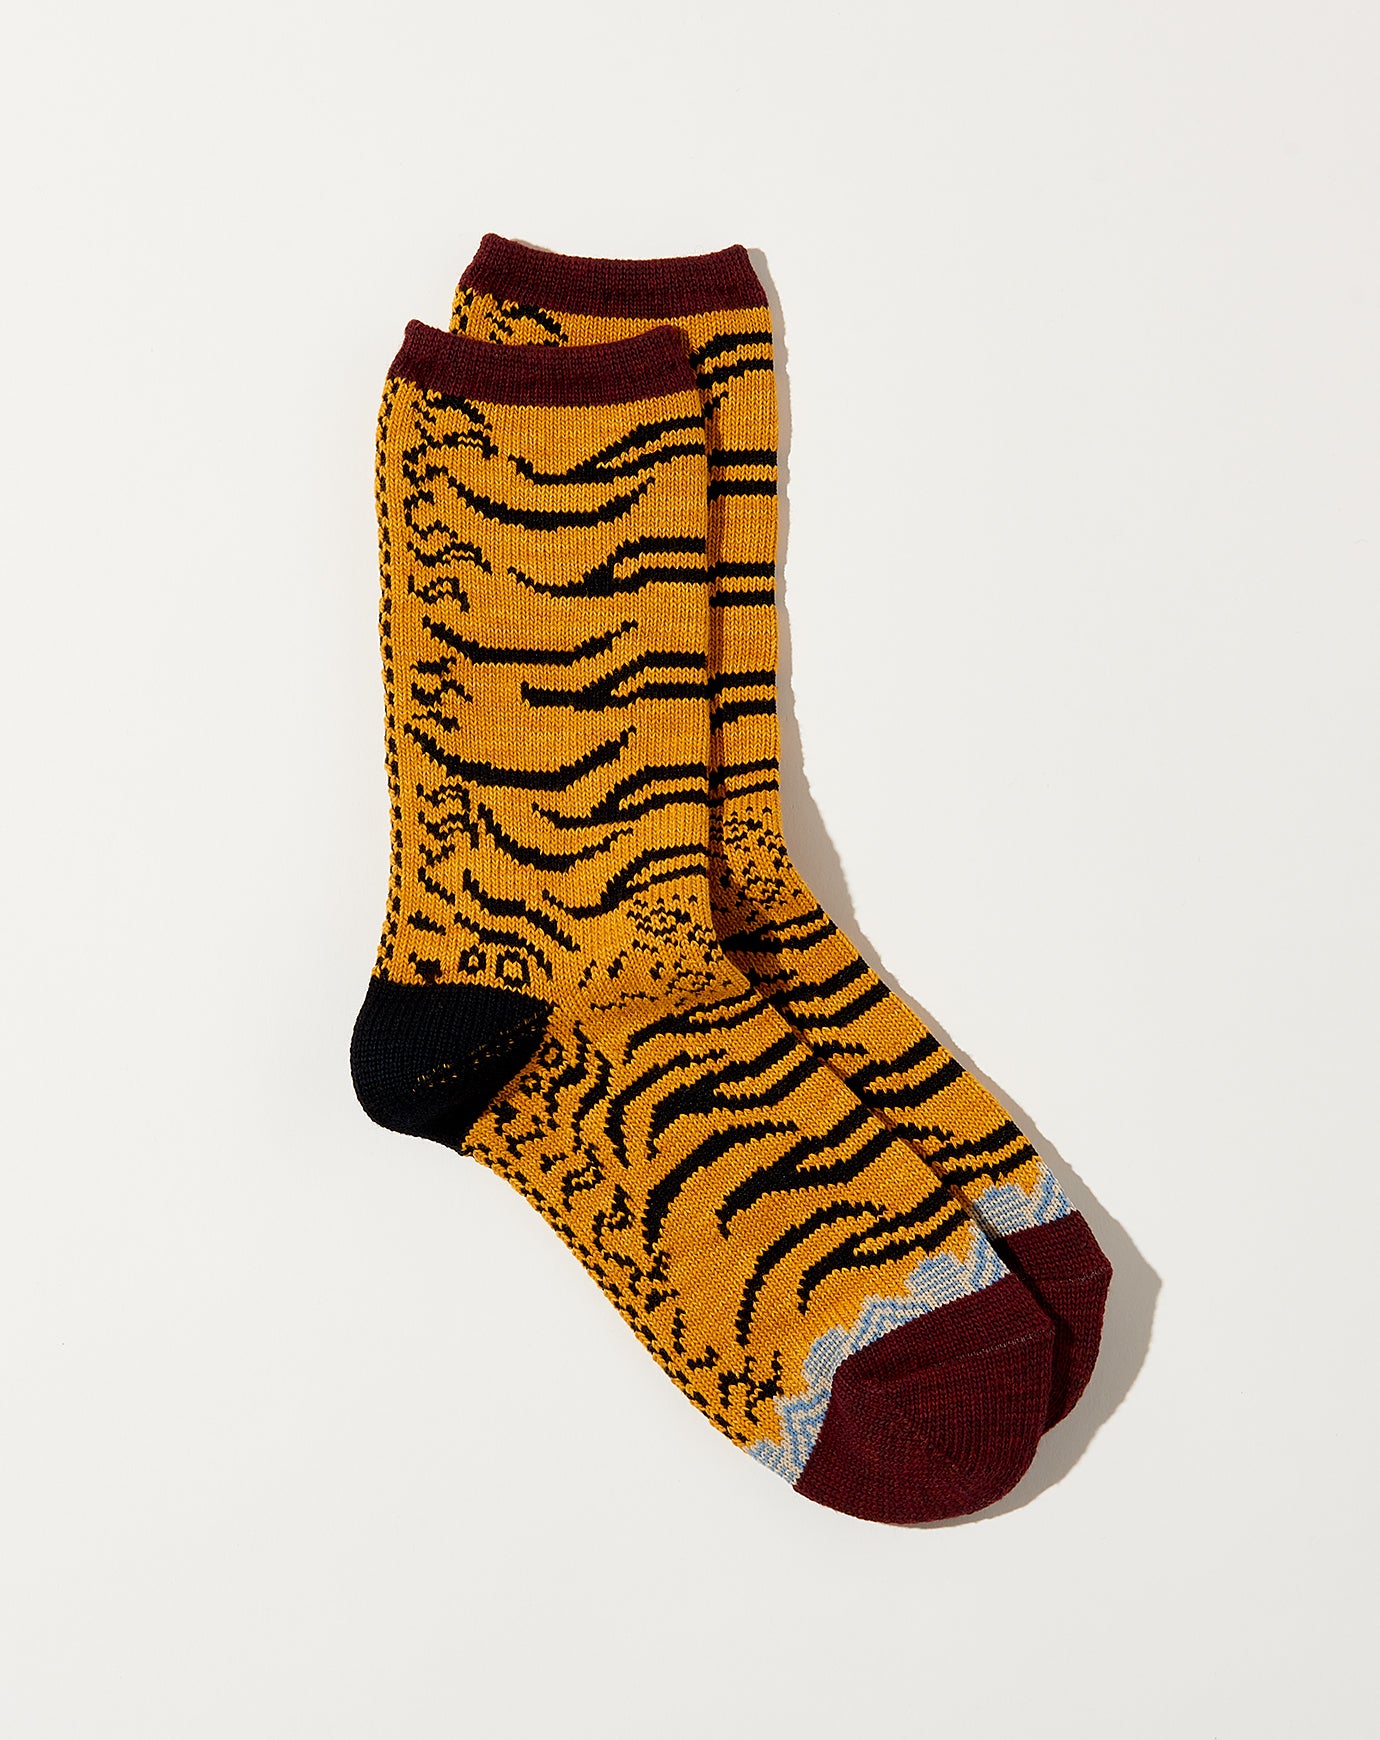 Kapital 84 Yarns Nepal Tiger Socks in Yellow